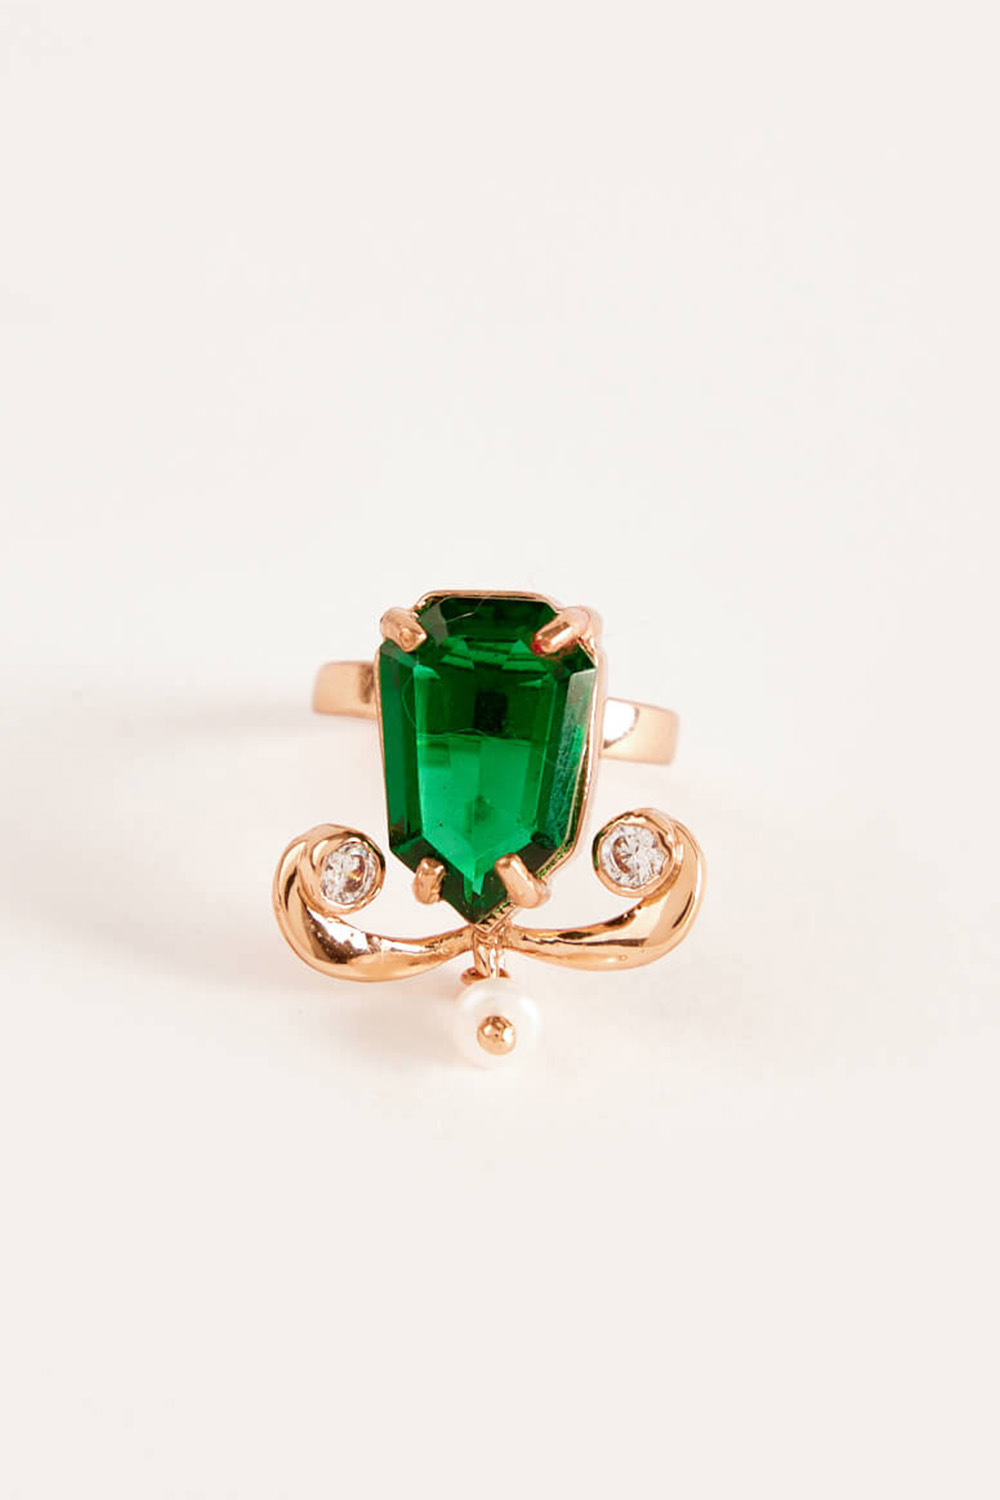 The Faena Gemstone Ring in Jade Green